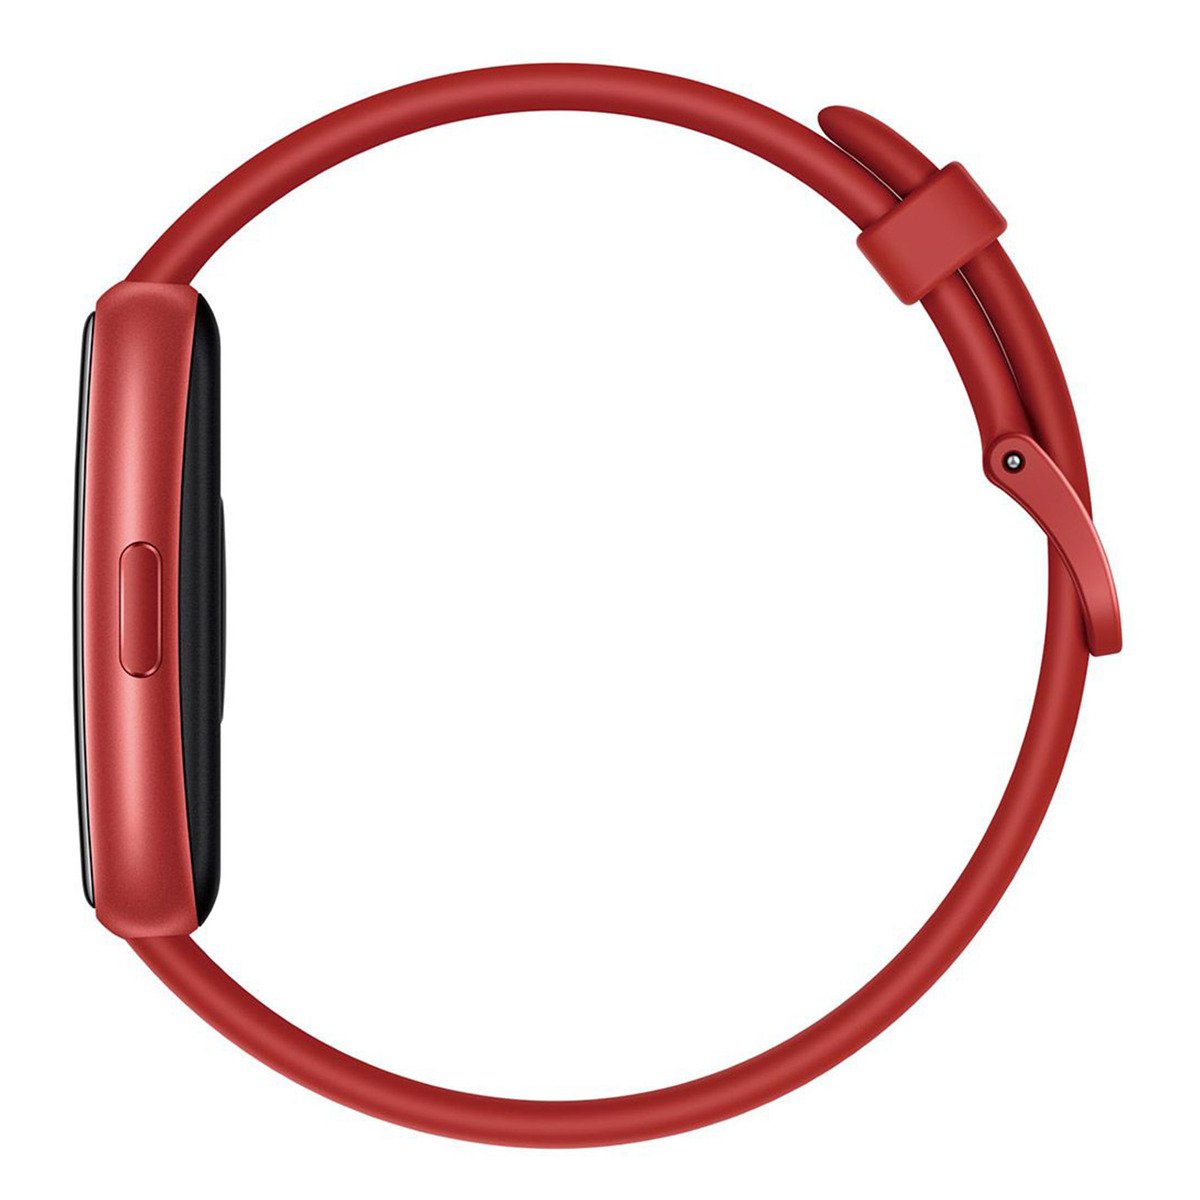 Huawei Smart Band 7 Leia-B19 Red